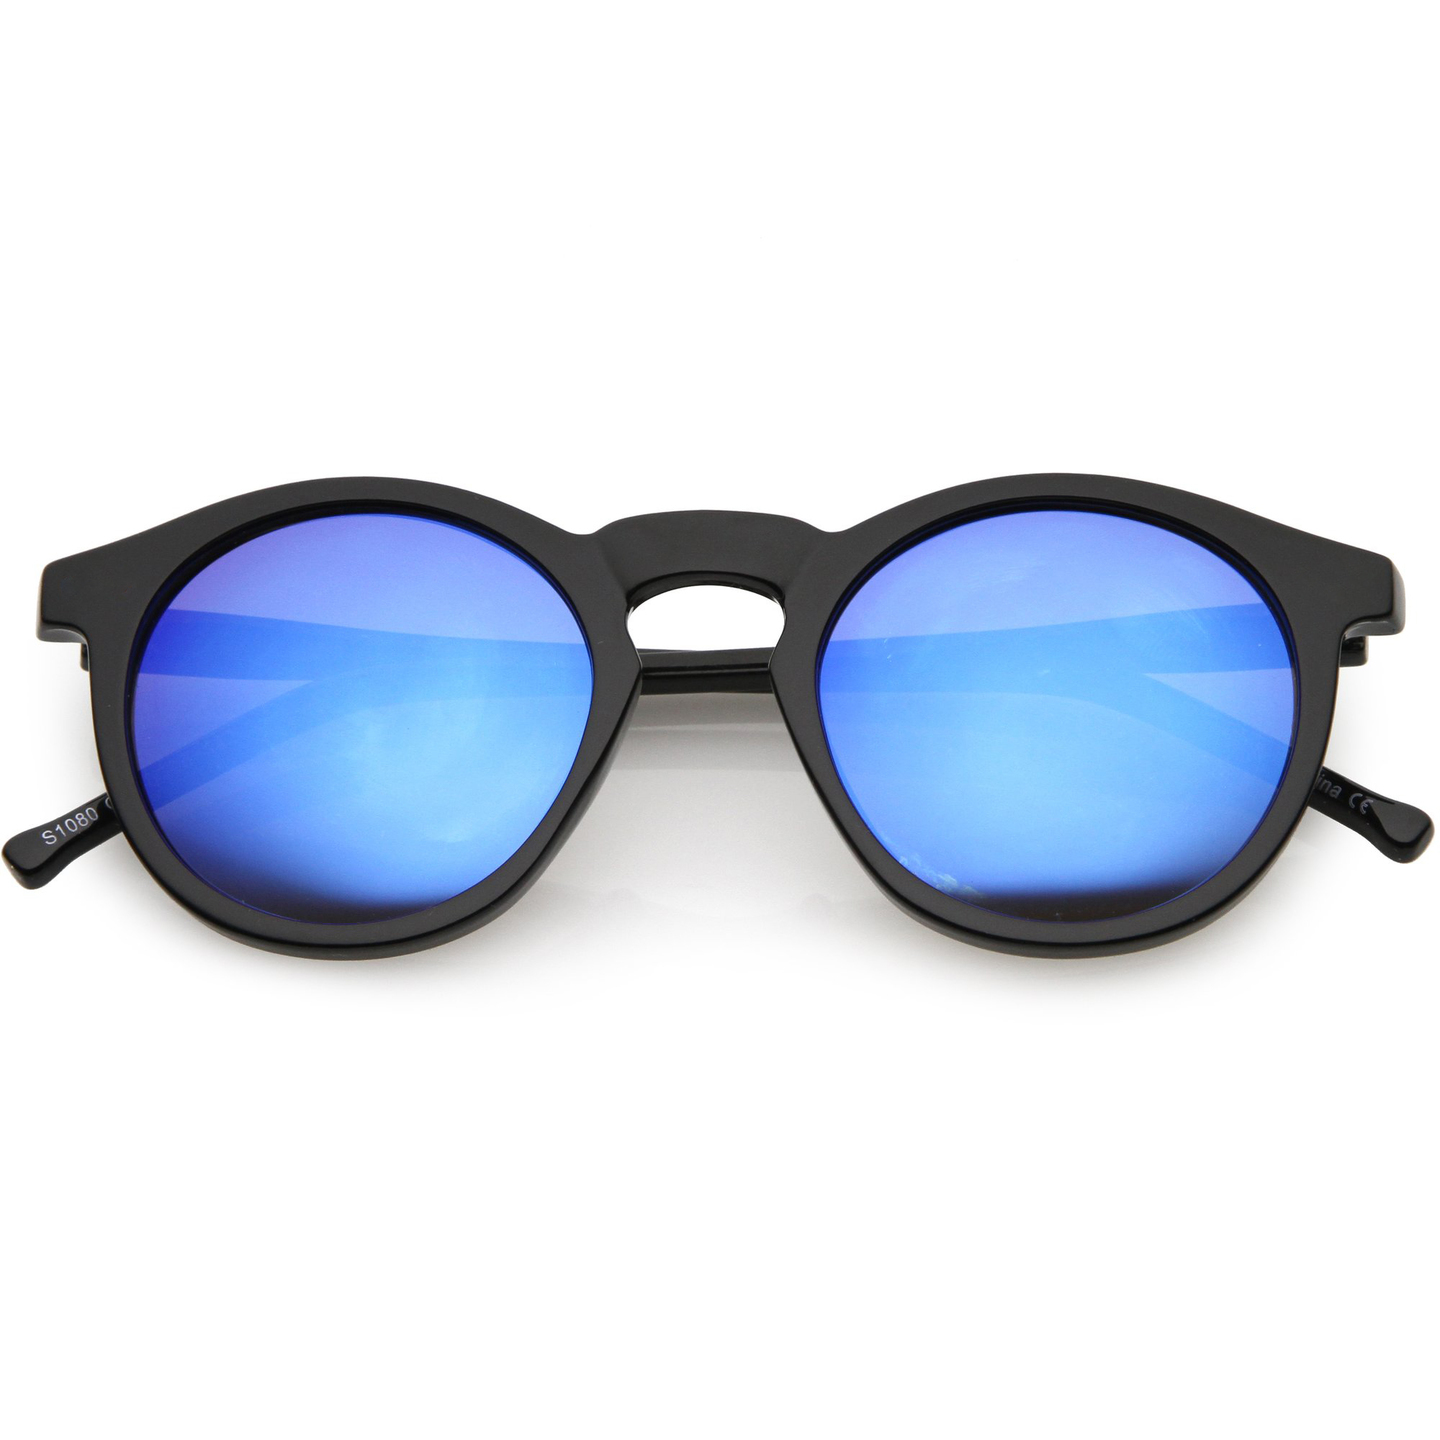 Blue Tint Mirrored Lens Round Frame Sunglasses